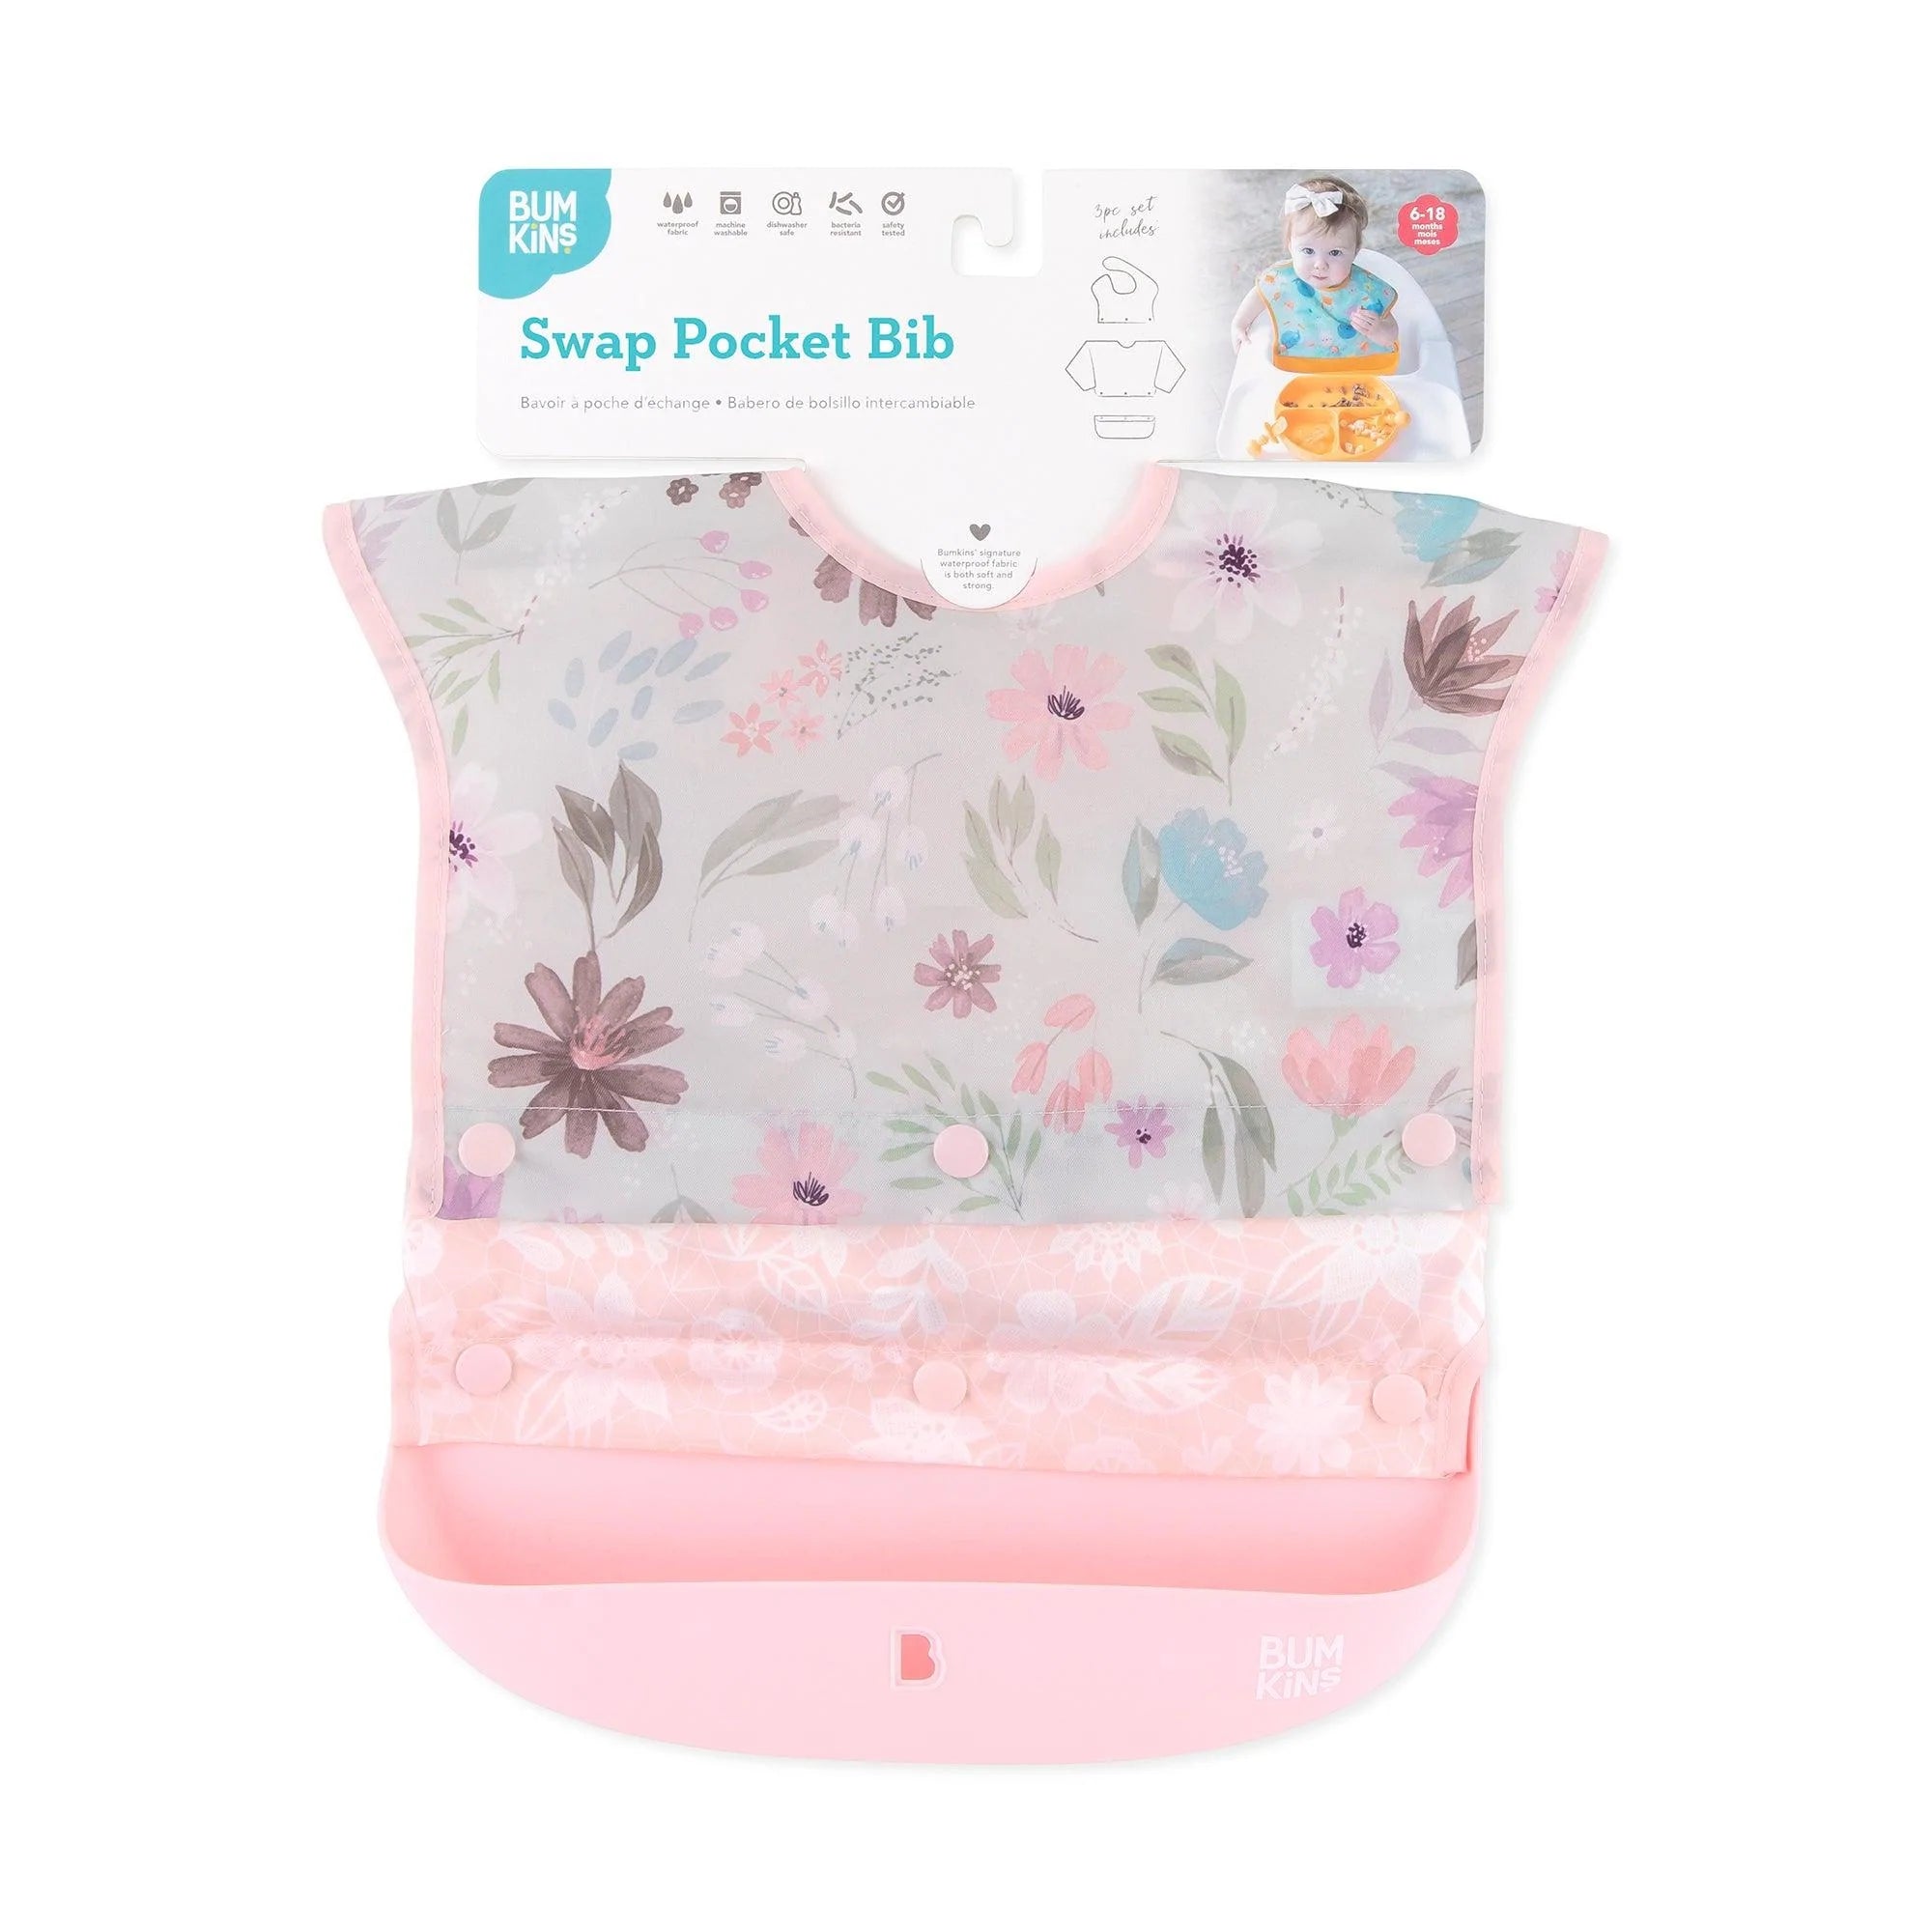 Swap Pocket Bib: Floral & Lace - Bumkins